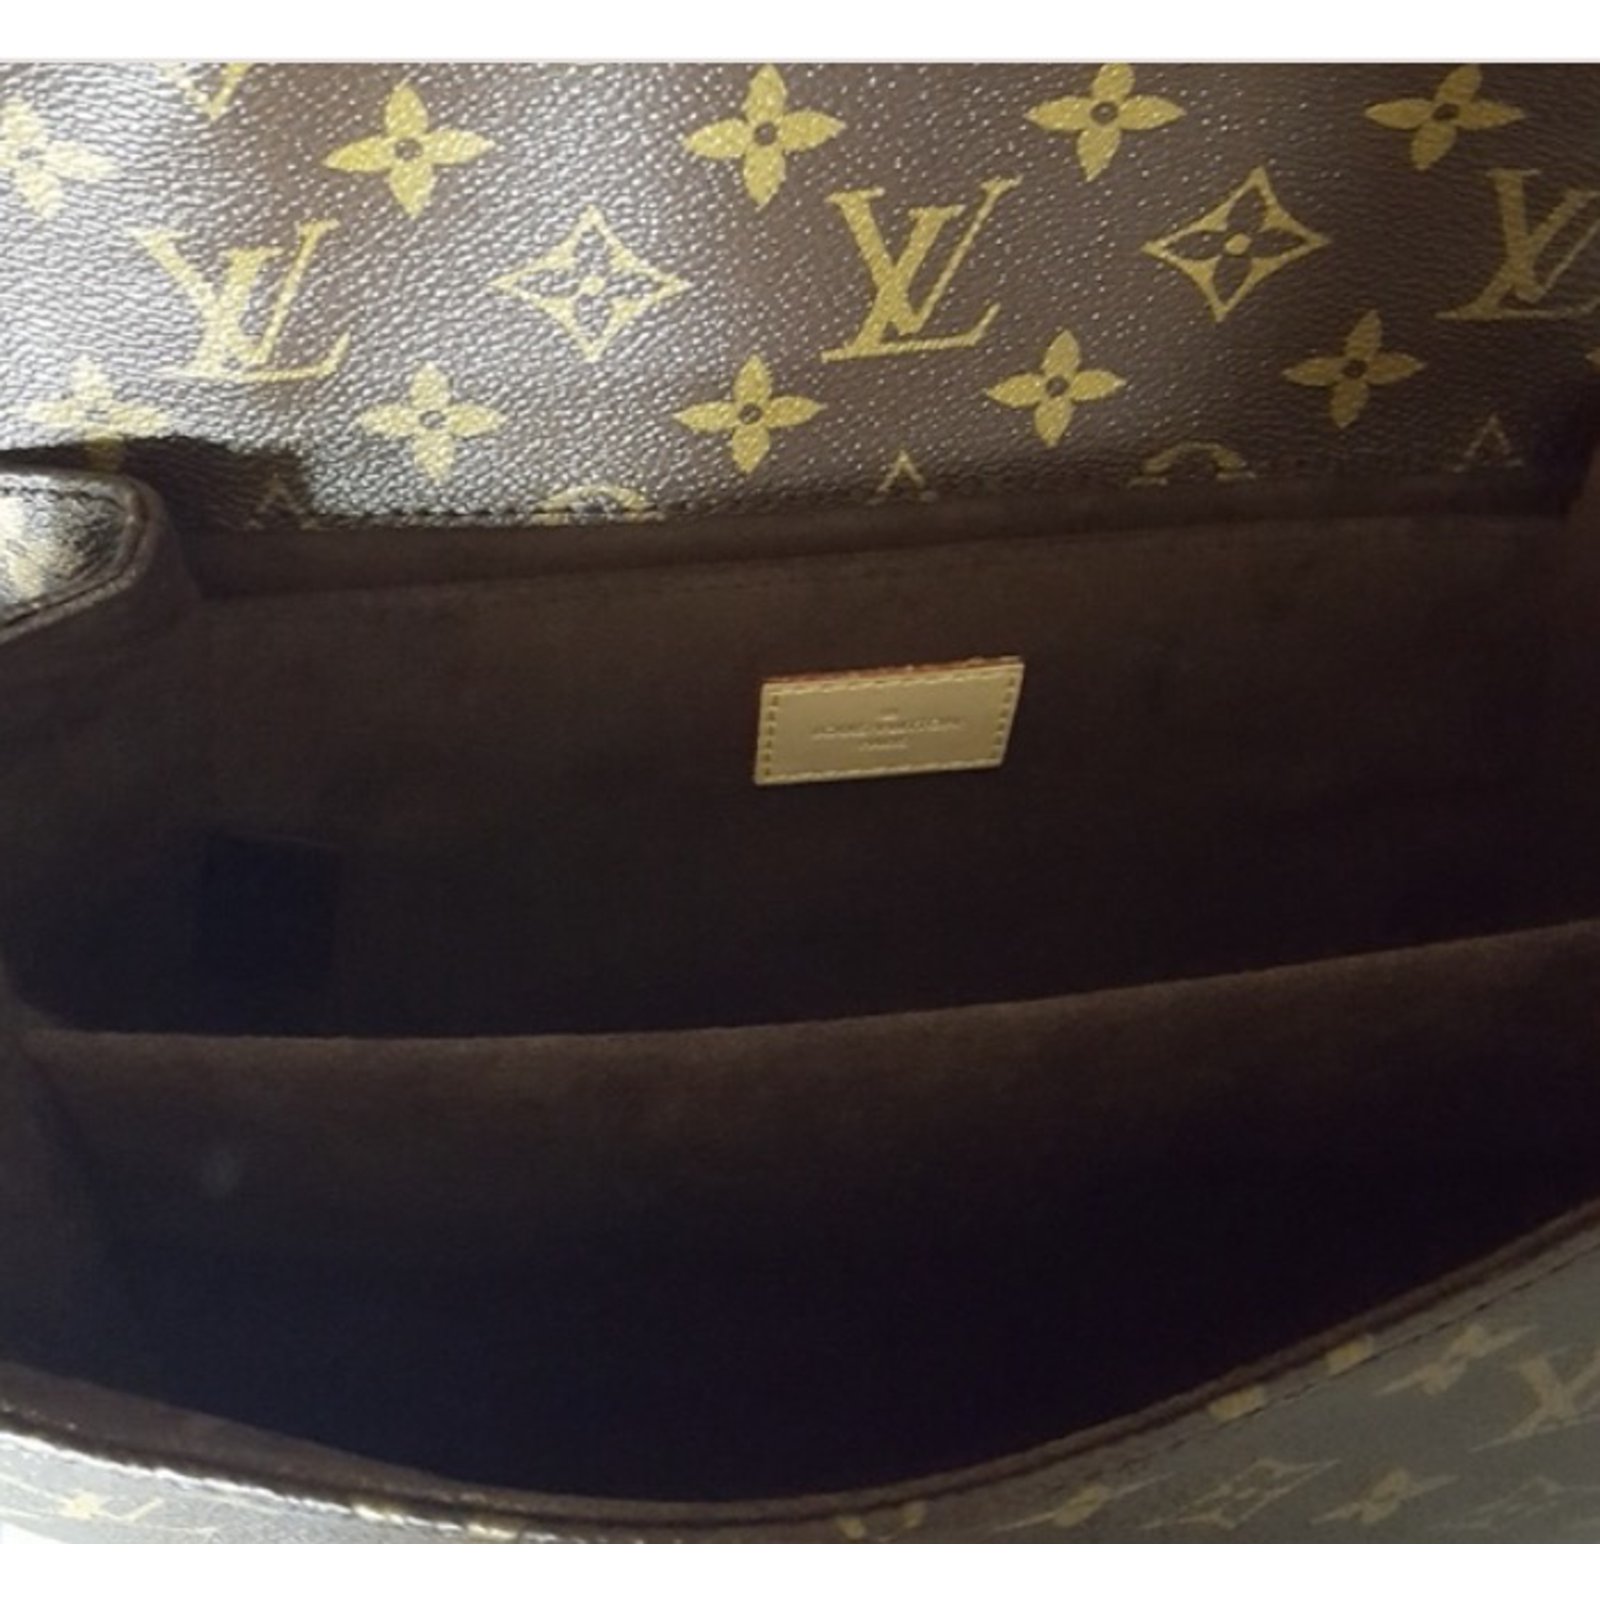 Metis cloth crossbody bag Louis Vuitton Brown in Cloth - 22930236